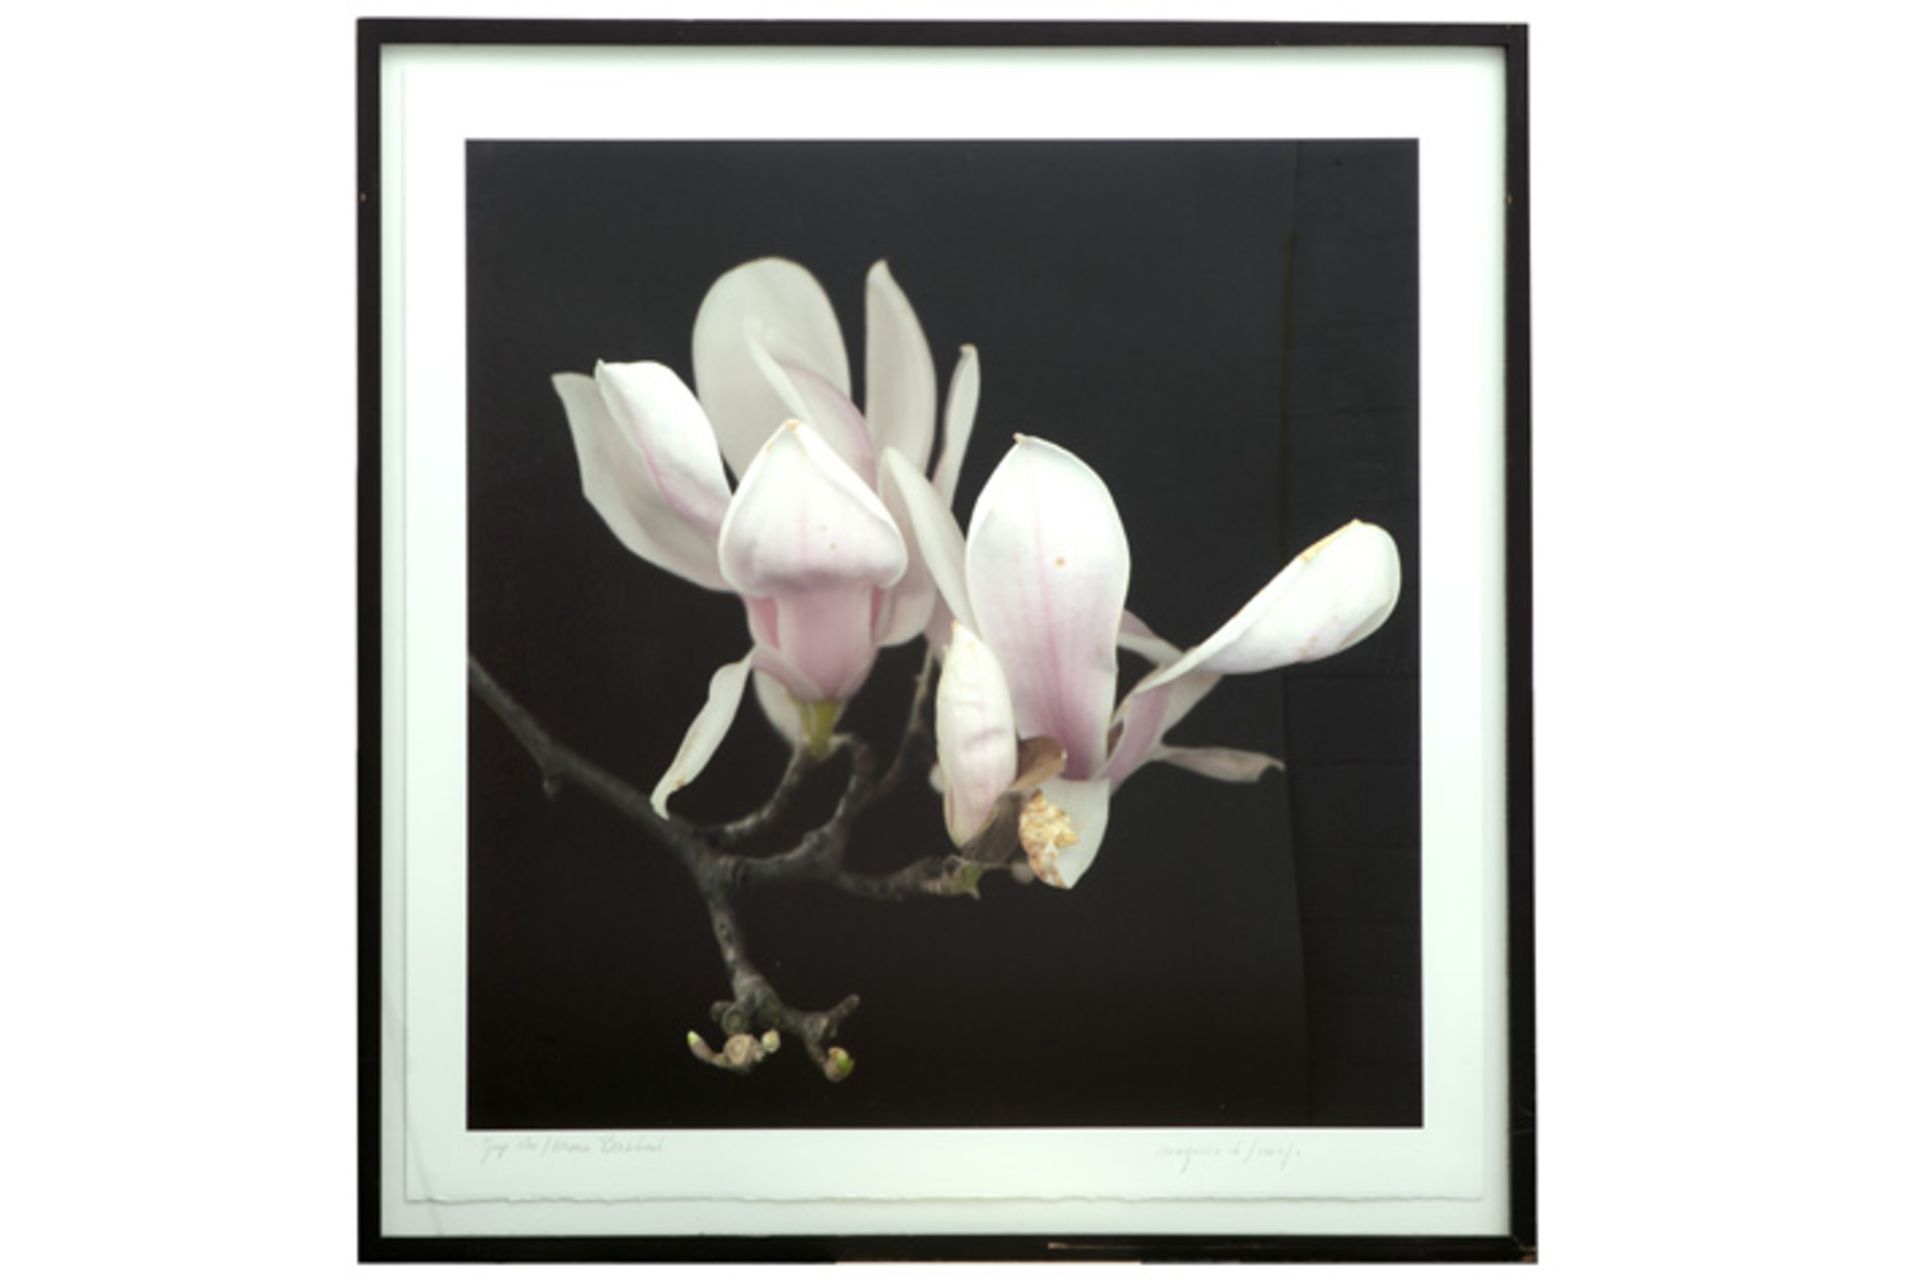 JOOP VOS & MARIA BERKHOUT foto (giclee print) op 10 ex. getiteld "Magnolia" - 77,5 [...]